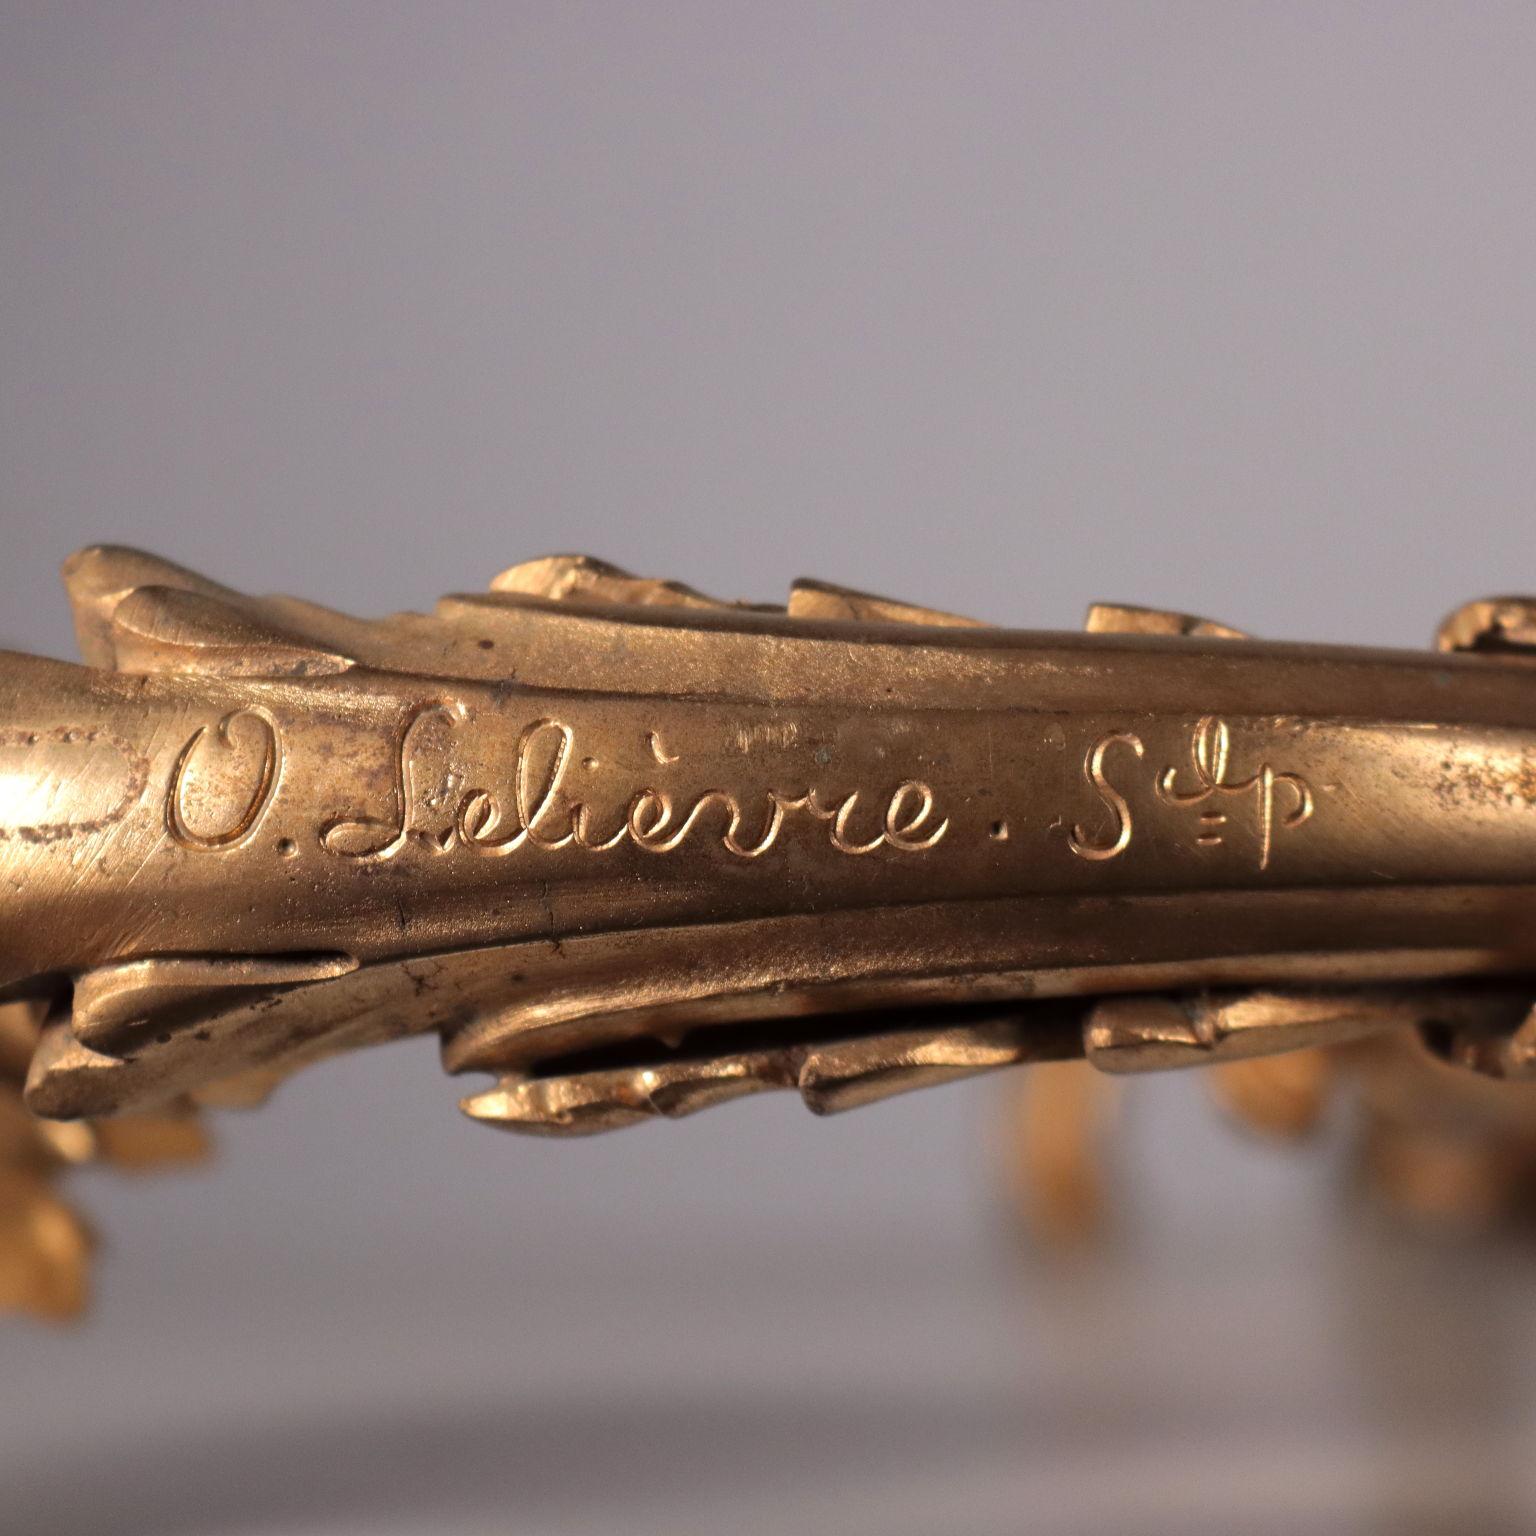 Chandelier “O. Lelièvre Sclp”, “Susse Fres Edts” Gilded Bronze For Sale 2